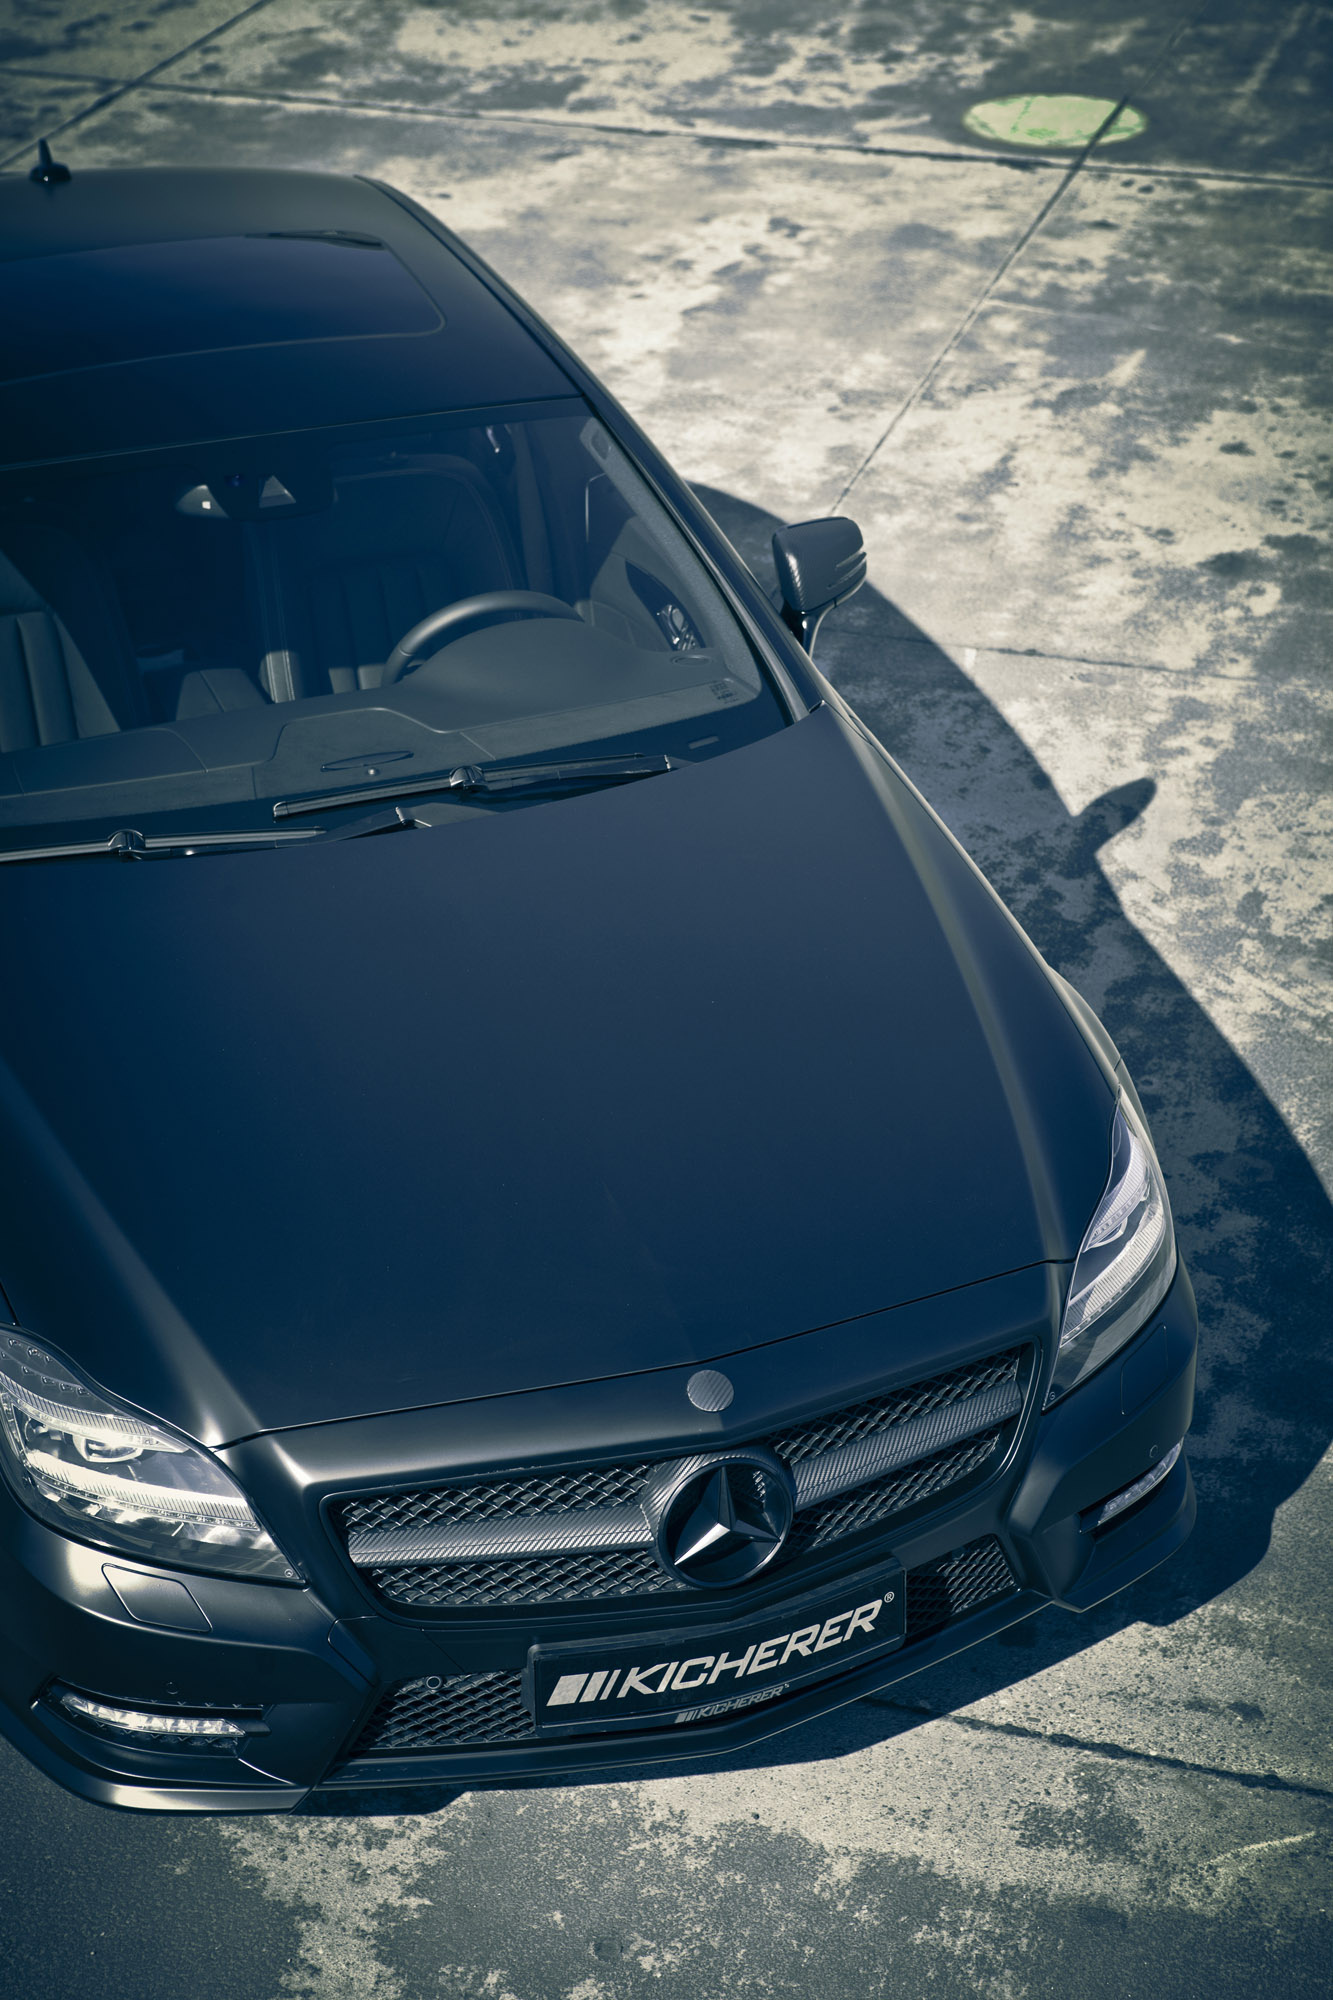 KICHERER Mercedes-Benz CLS Edition Black